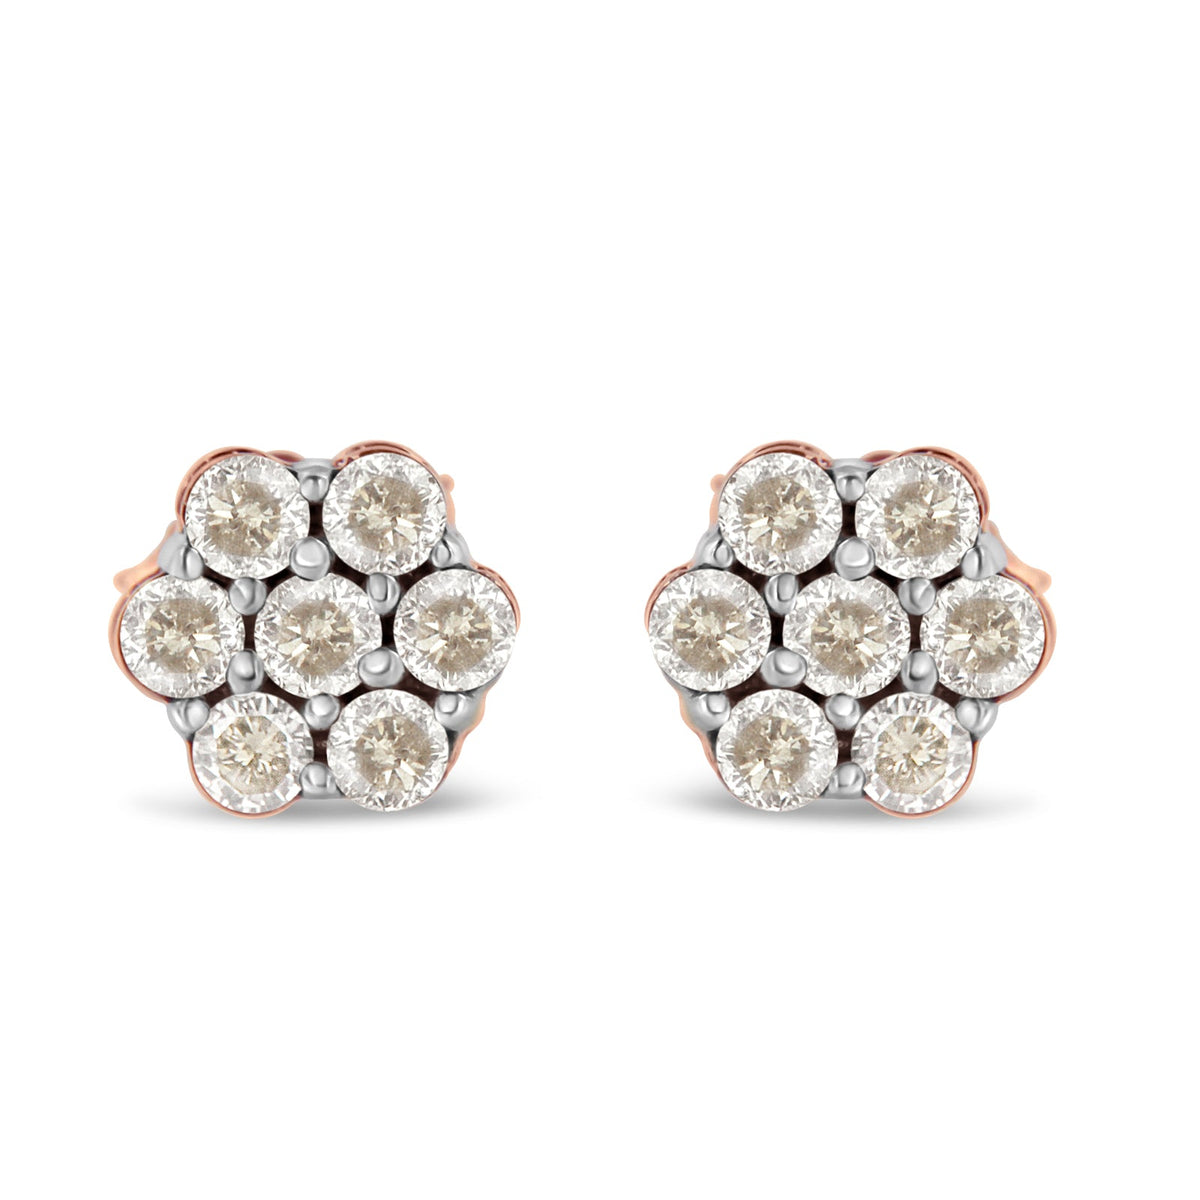 10K Rose Gold Diamond Floral Stud Earrings (0.5 cttw, J-K Color, I1-I2 Clarity) - LinkagejewelrydesignLinkagejewelrydesign